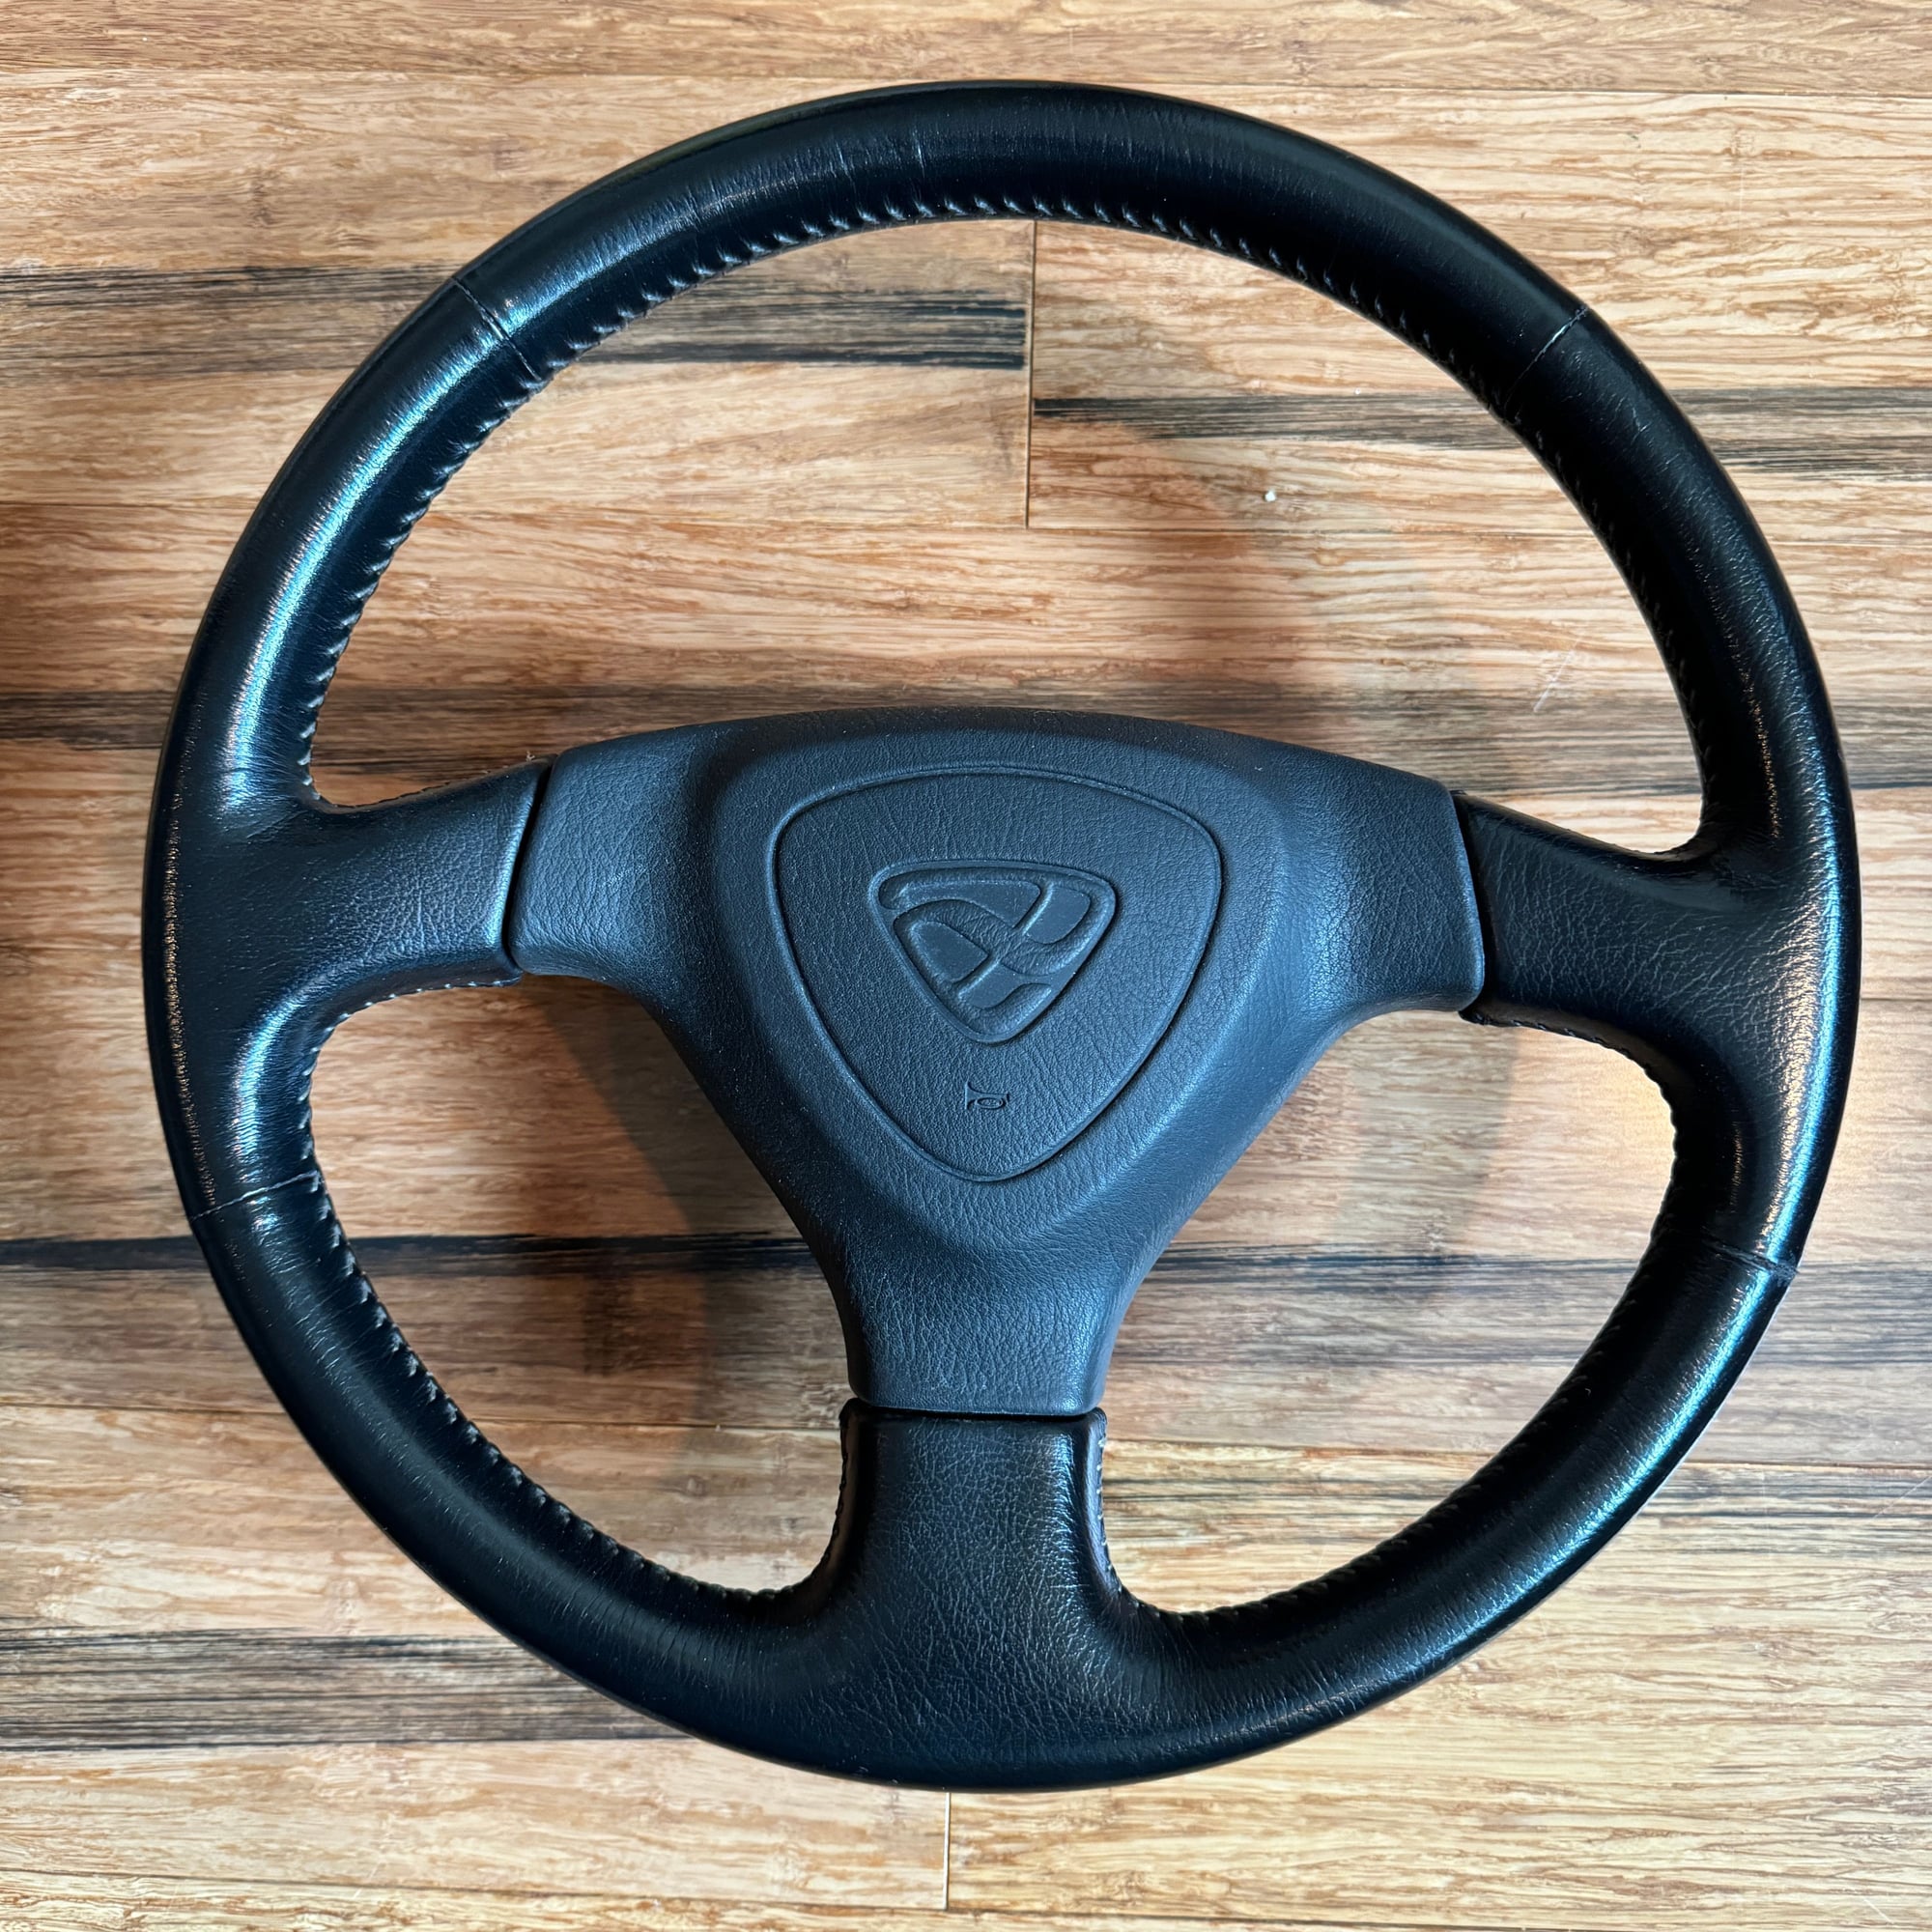 Interior/Upholstery - Super Clean Original Efini Steering Wheel - Used - Birmingham, MI 48323, United States